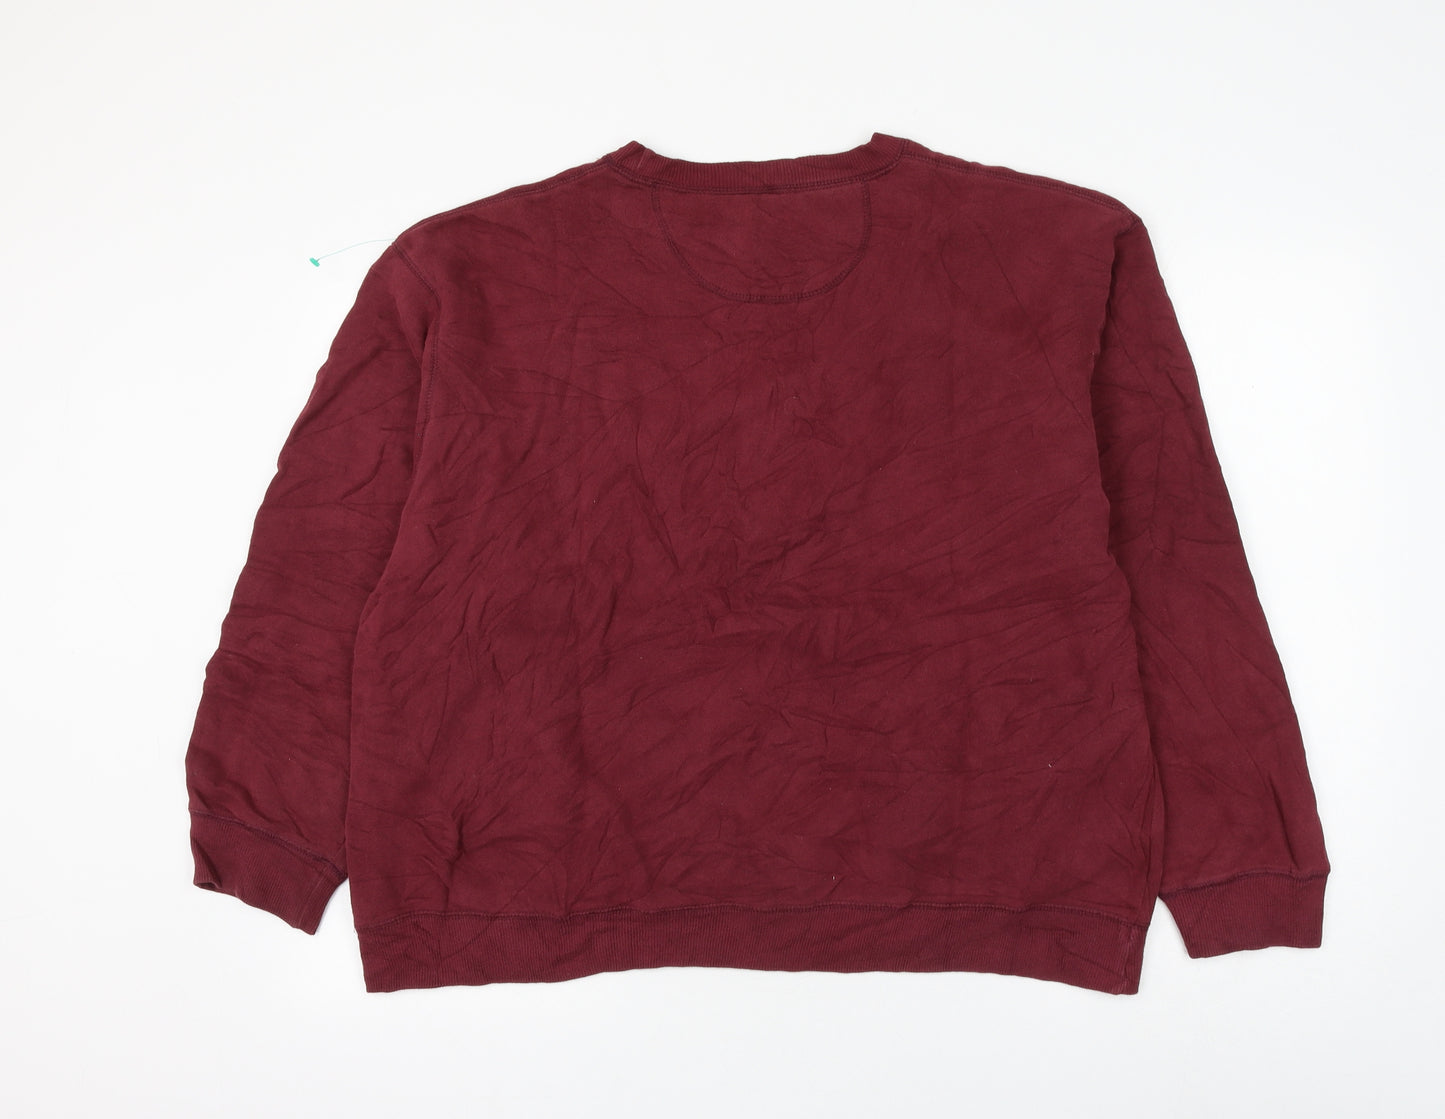 Athletech Mens Red Cotton Pullover Sweatshirt Size XL